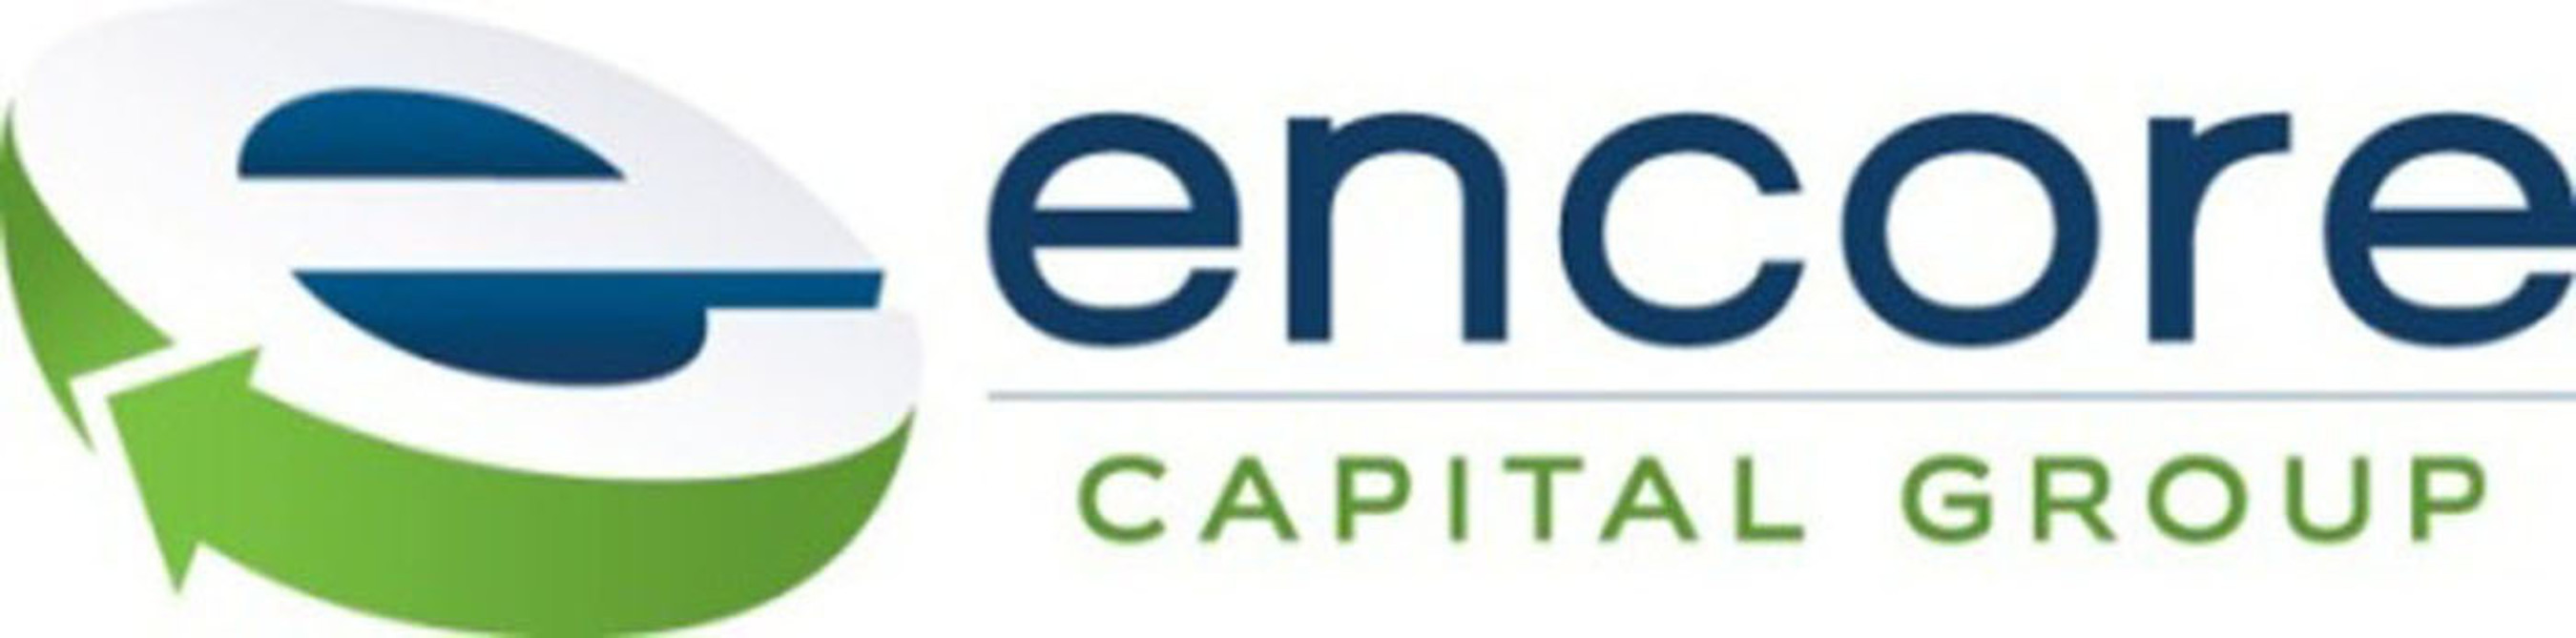 Encore Capital Group, Inc. (PRNewsFoto/Encore Capital Group, Inc.) (PRNewsFoto/ENCORE CAPITAL GROUP_ INC_)